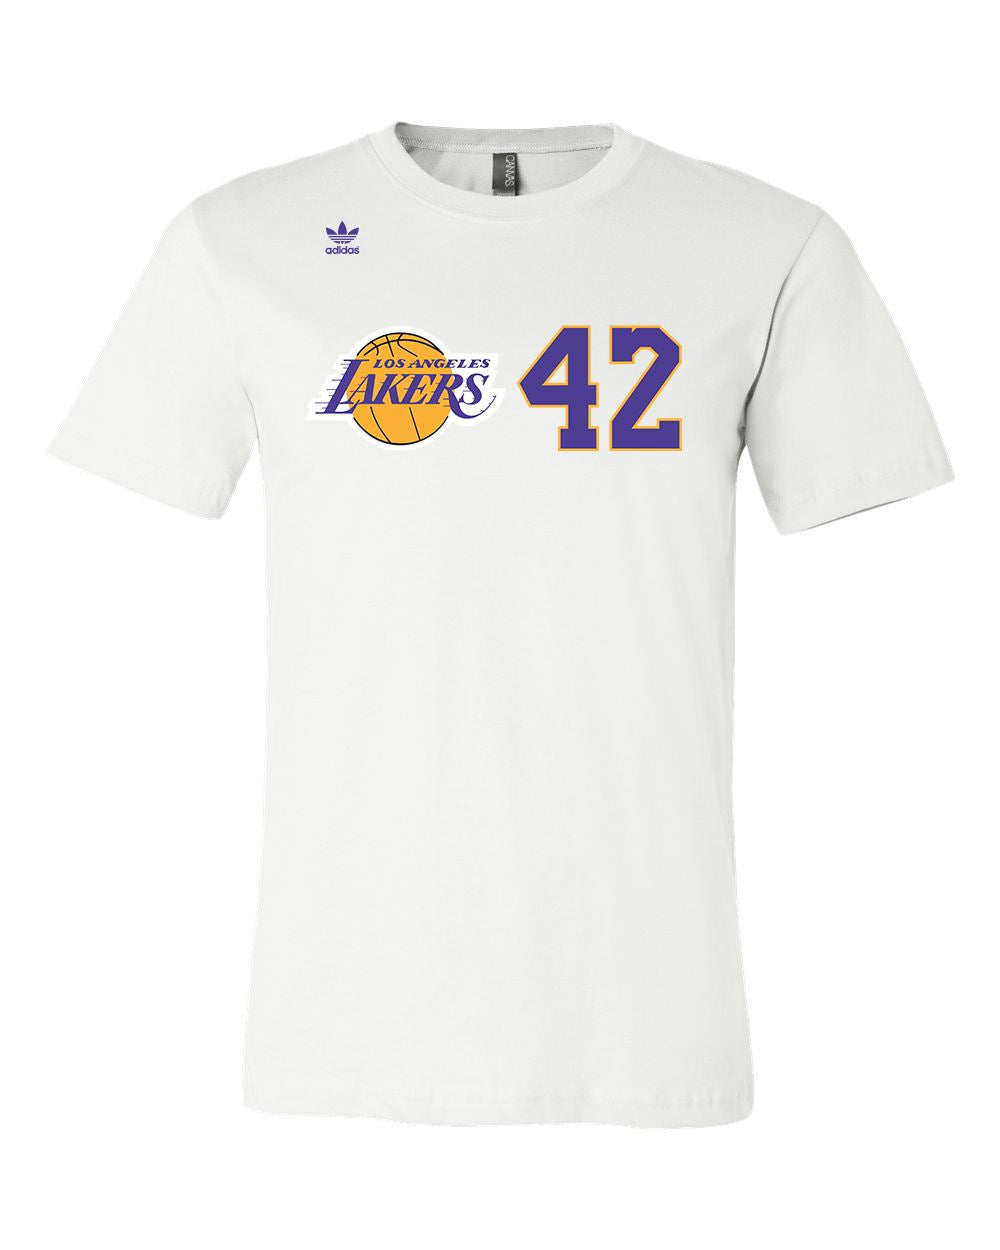 James Worthy Los Angeles Lakers Abstract Art T-Shirt by Joe